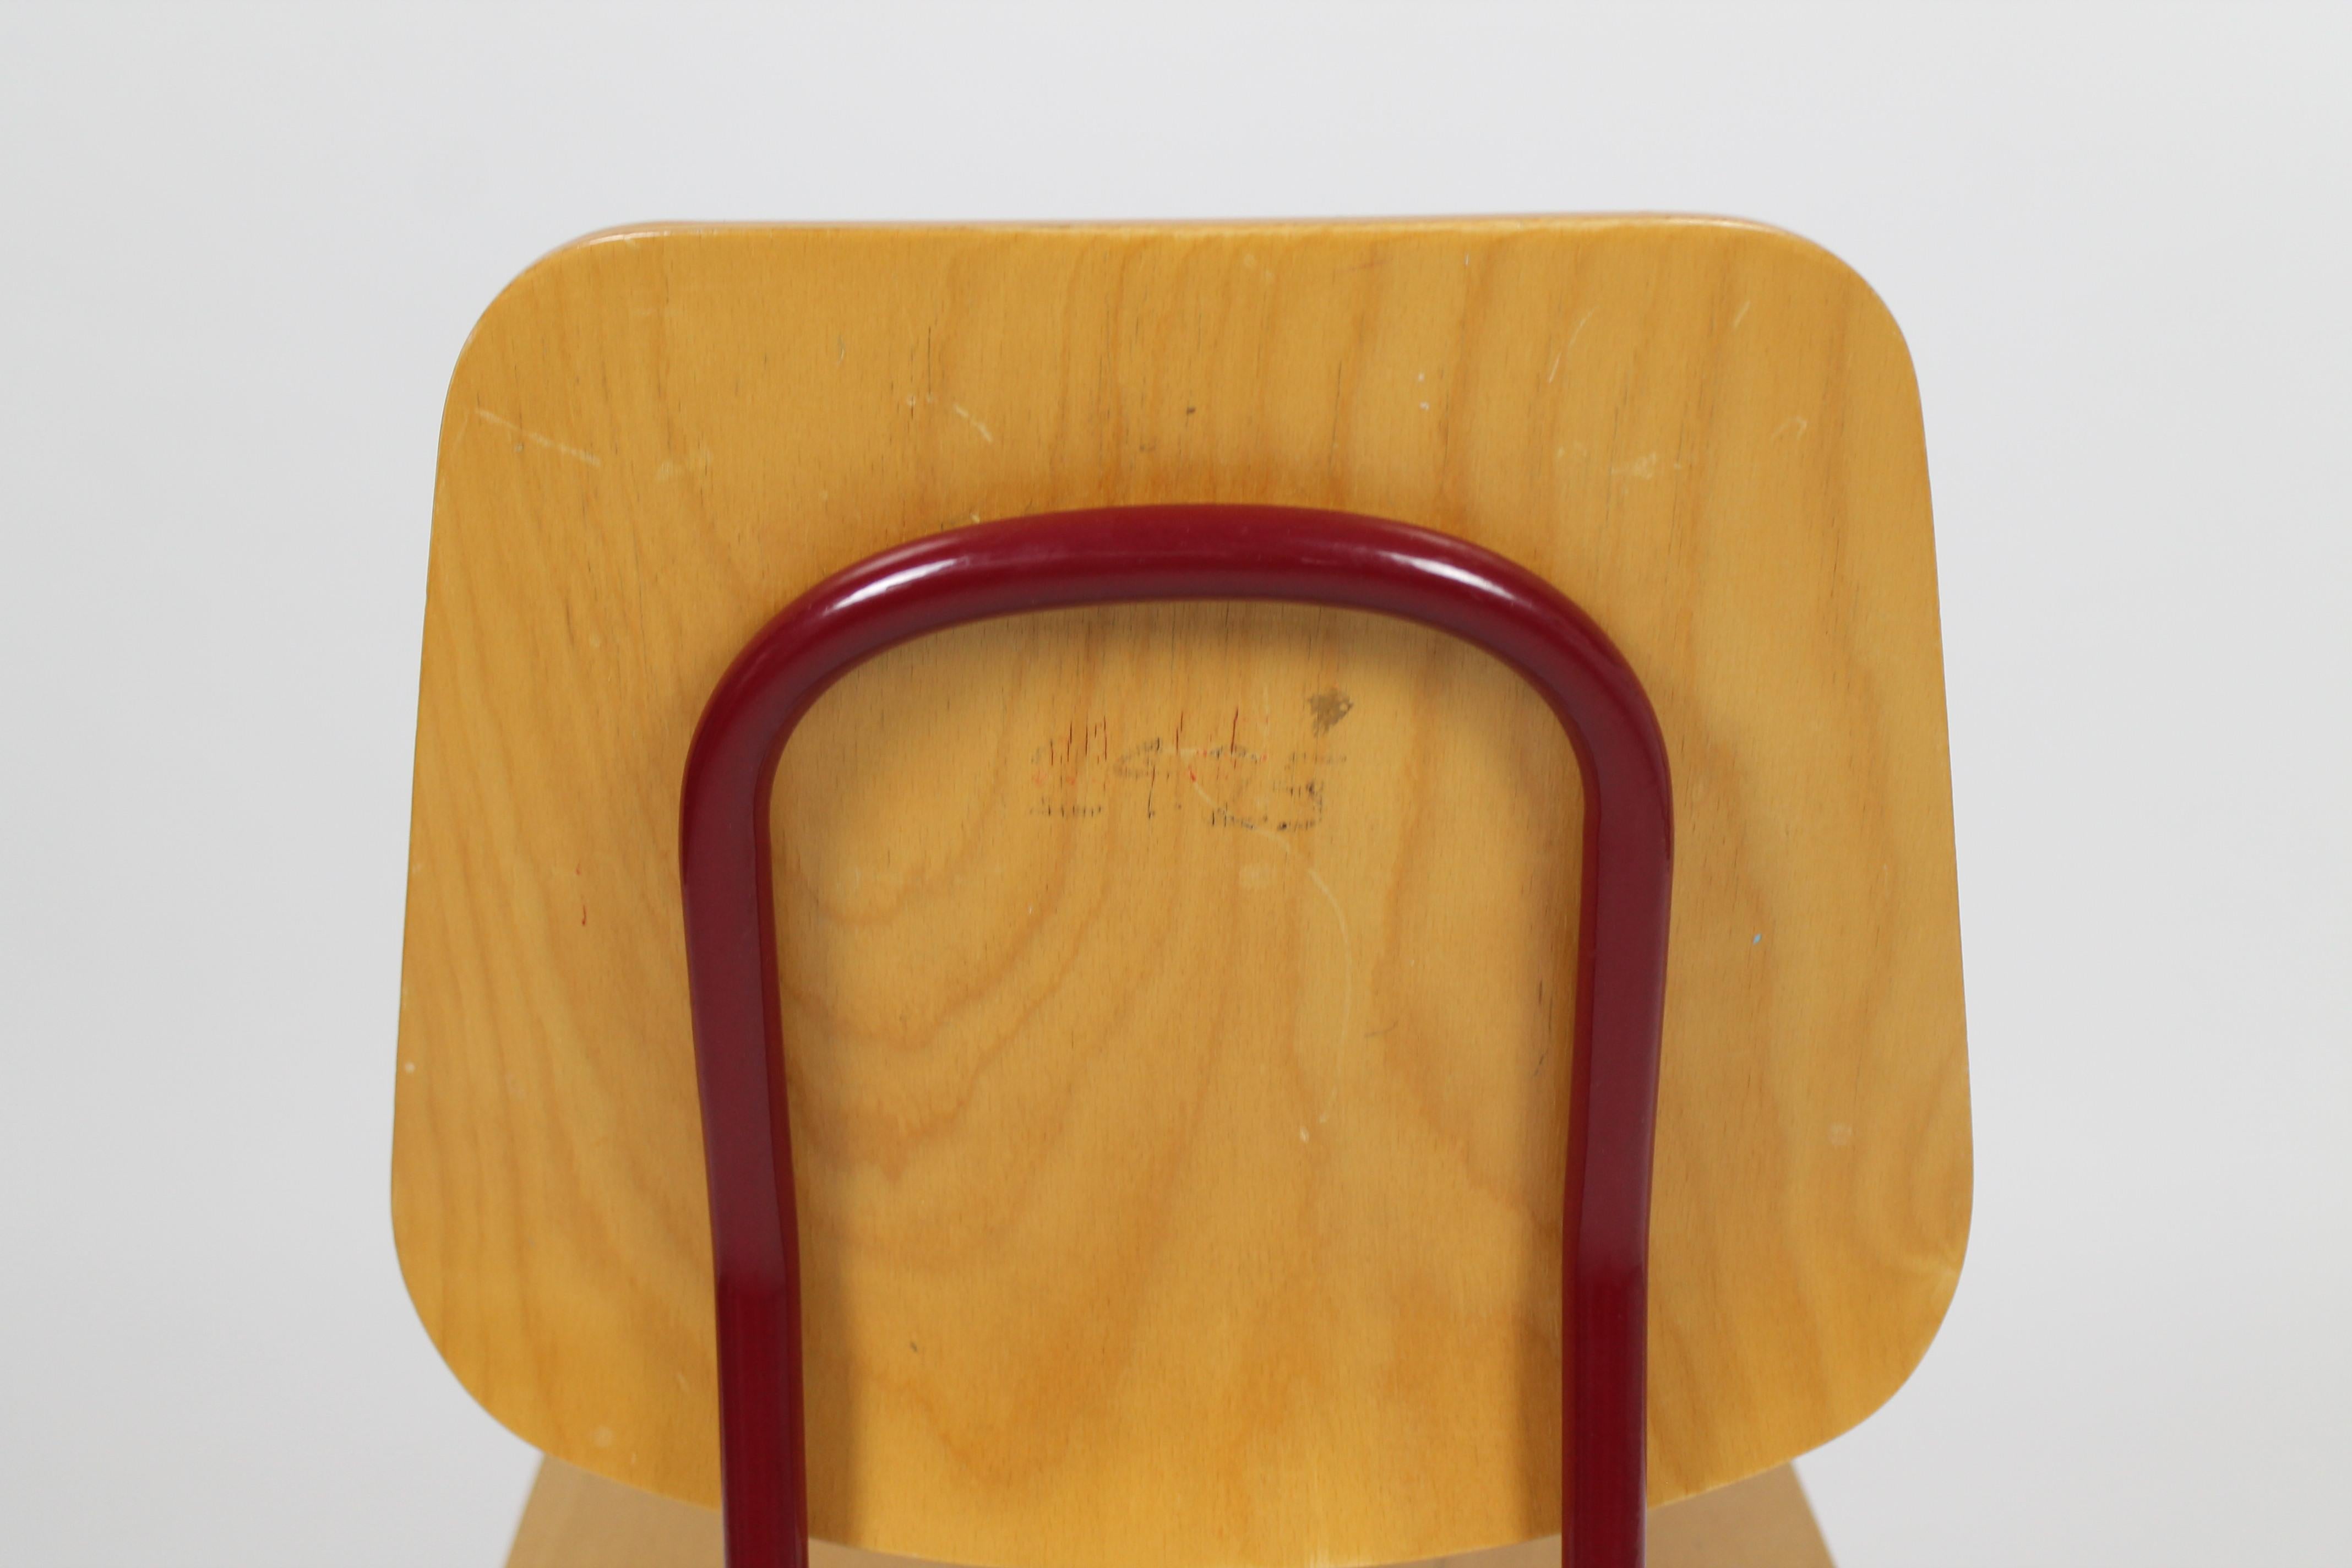  Height Adjustable School Chair by Embru 1960's Switzerland In Good Condition For Sale In Debrecen-Pallag, HU